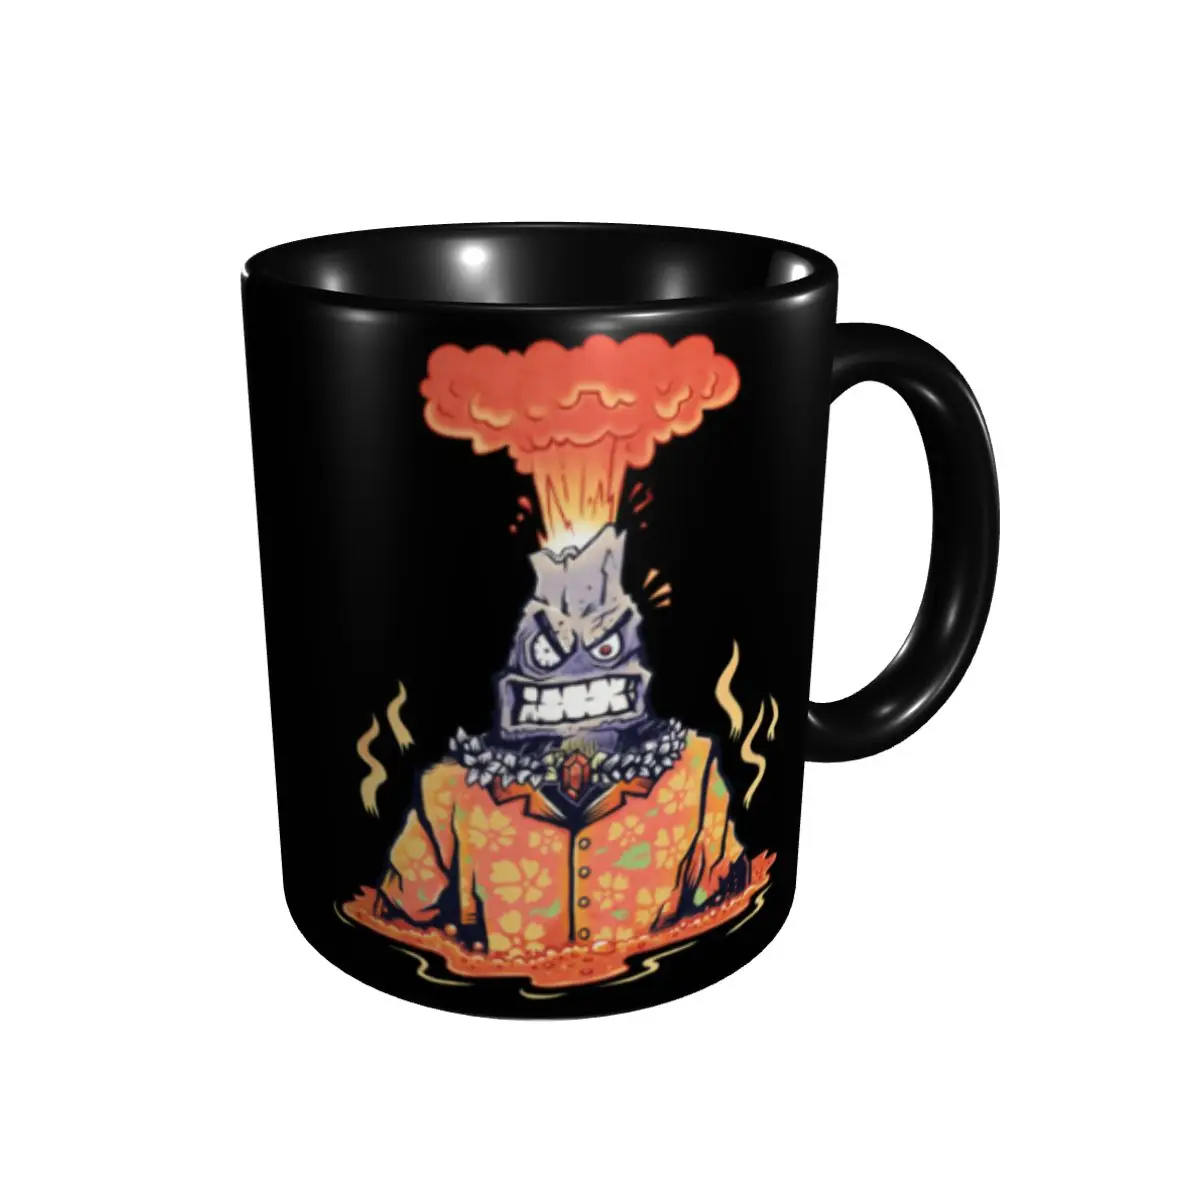 

Promo Tonga Volcano Joe Mugs Funny Graphic Cups Mugs Print Funny Geek Hollow beer mugs